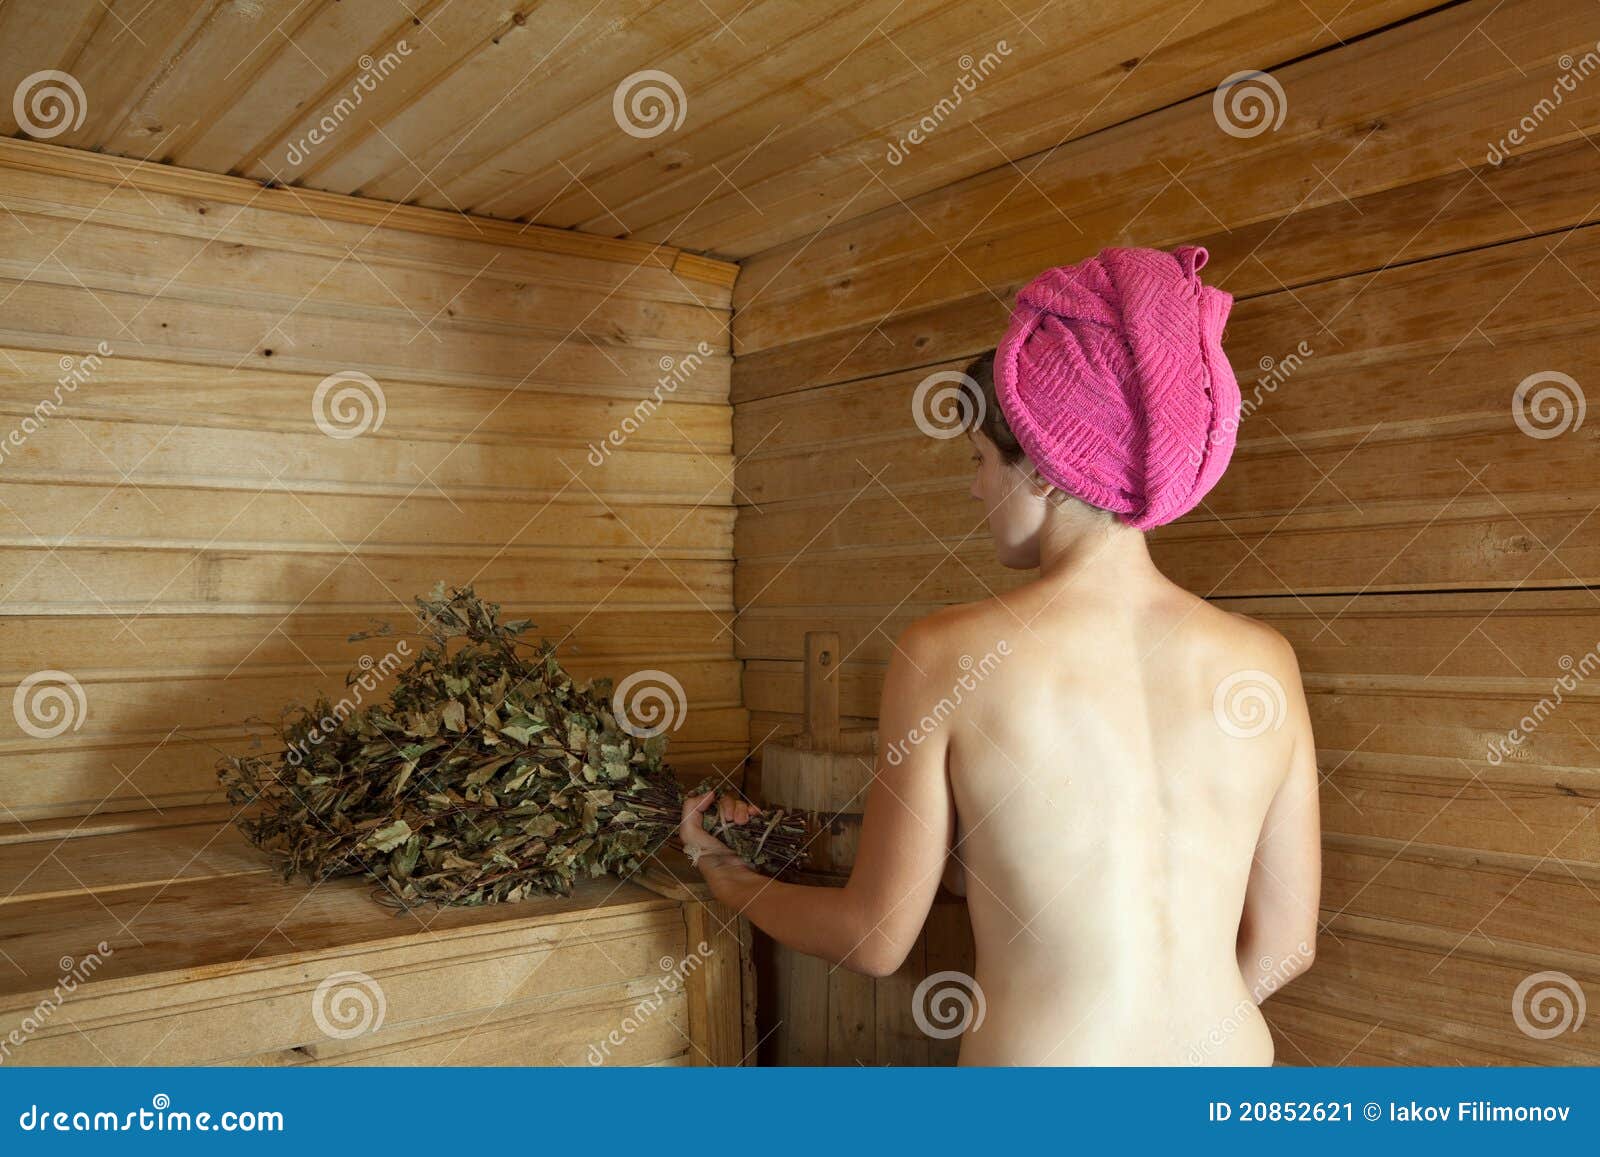 во сне мыться голым в бане фото 29